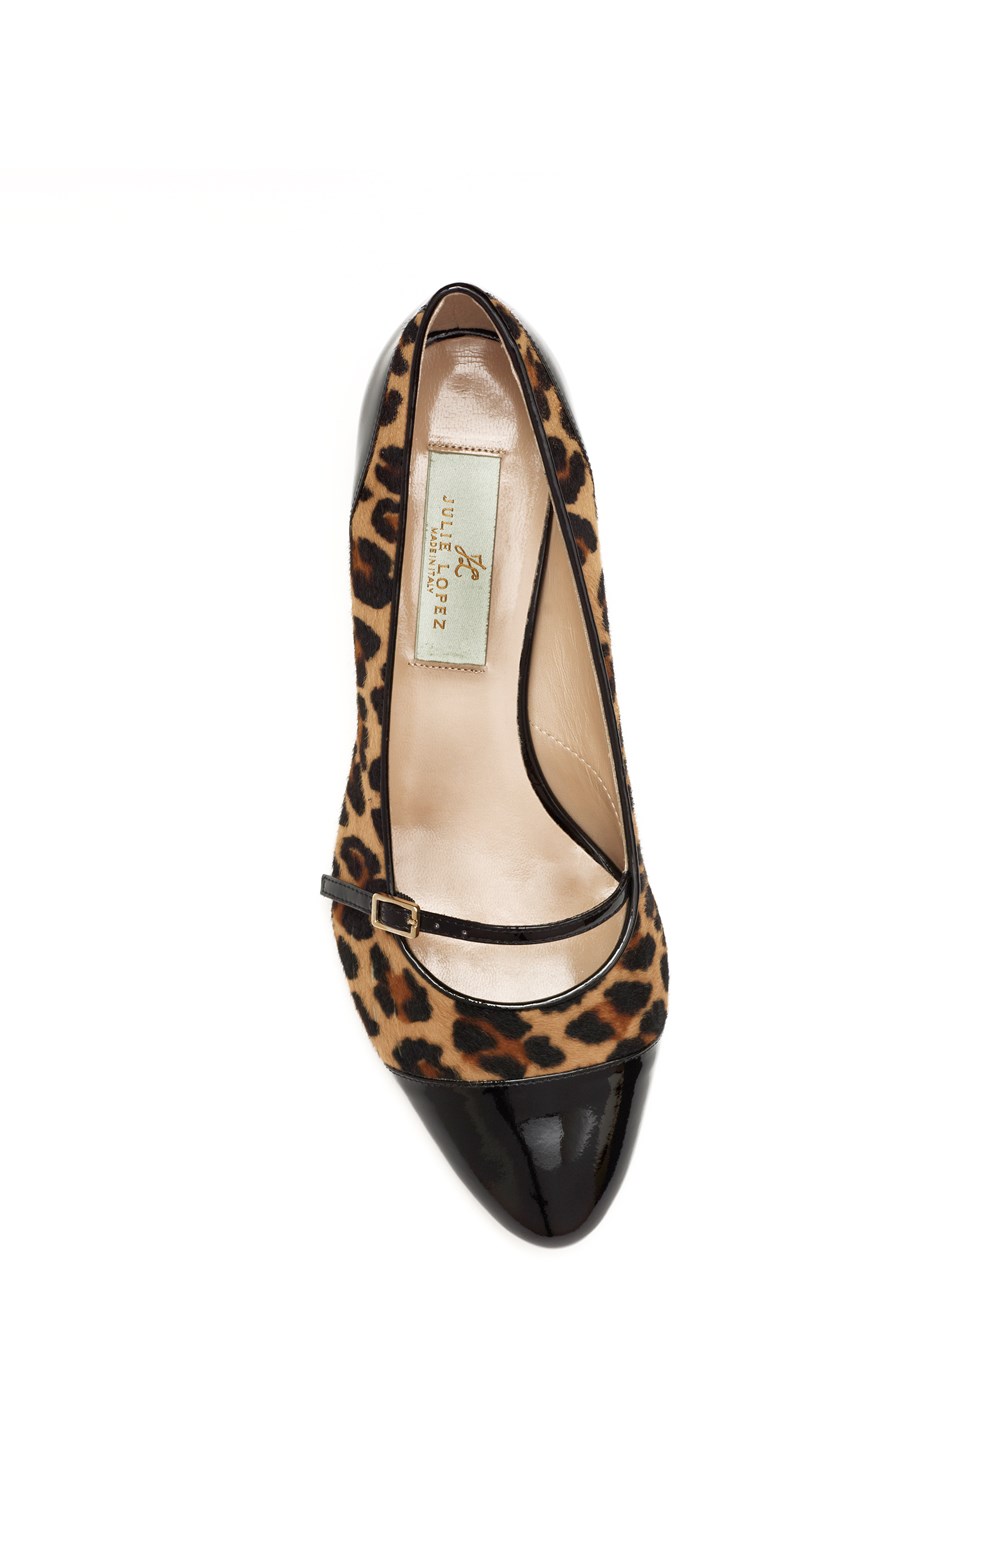 Blair - comfortable heels - heels for bunions | Julie Lopez Shoes